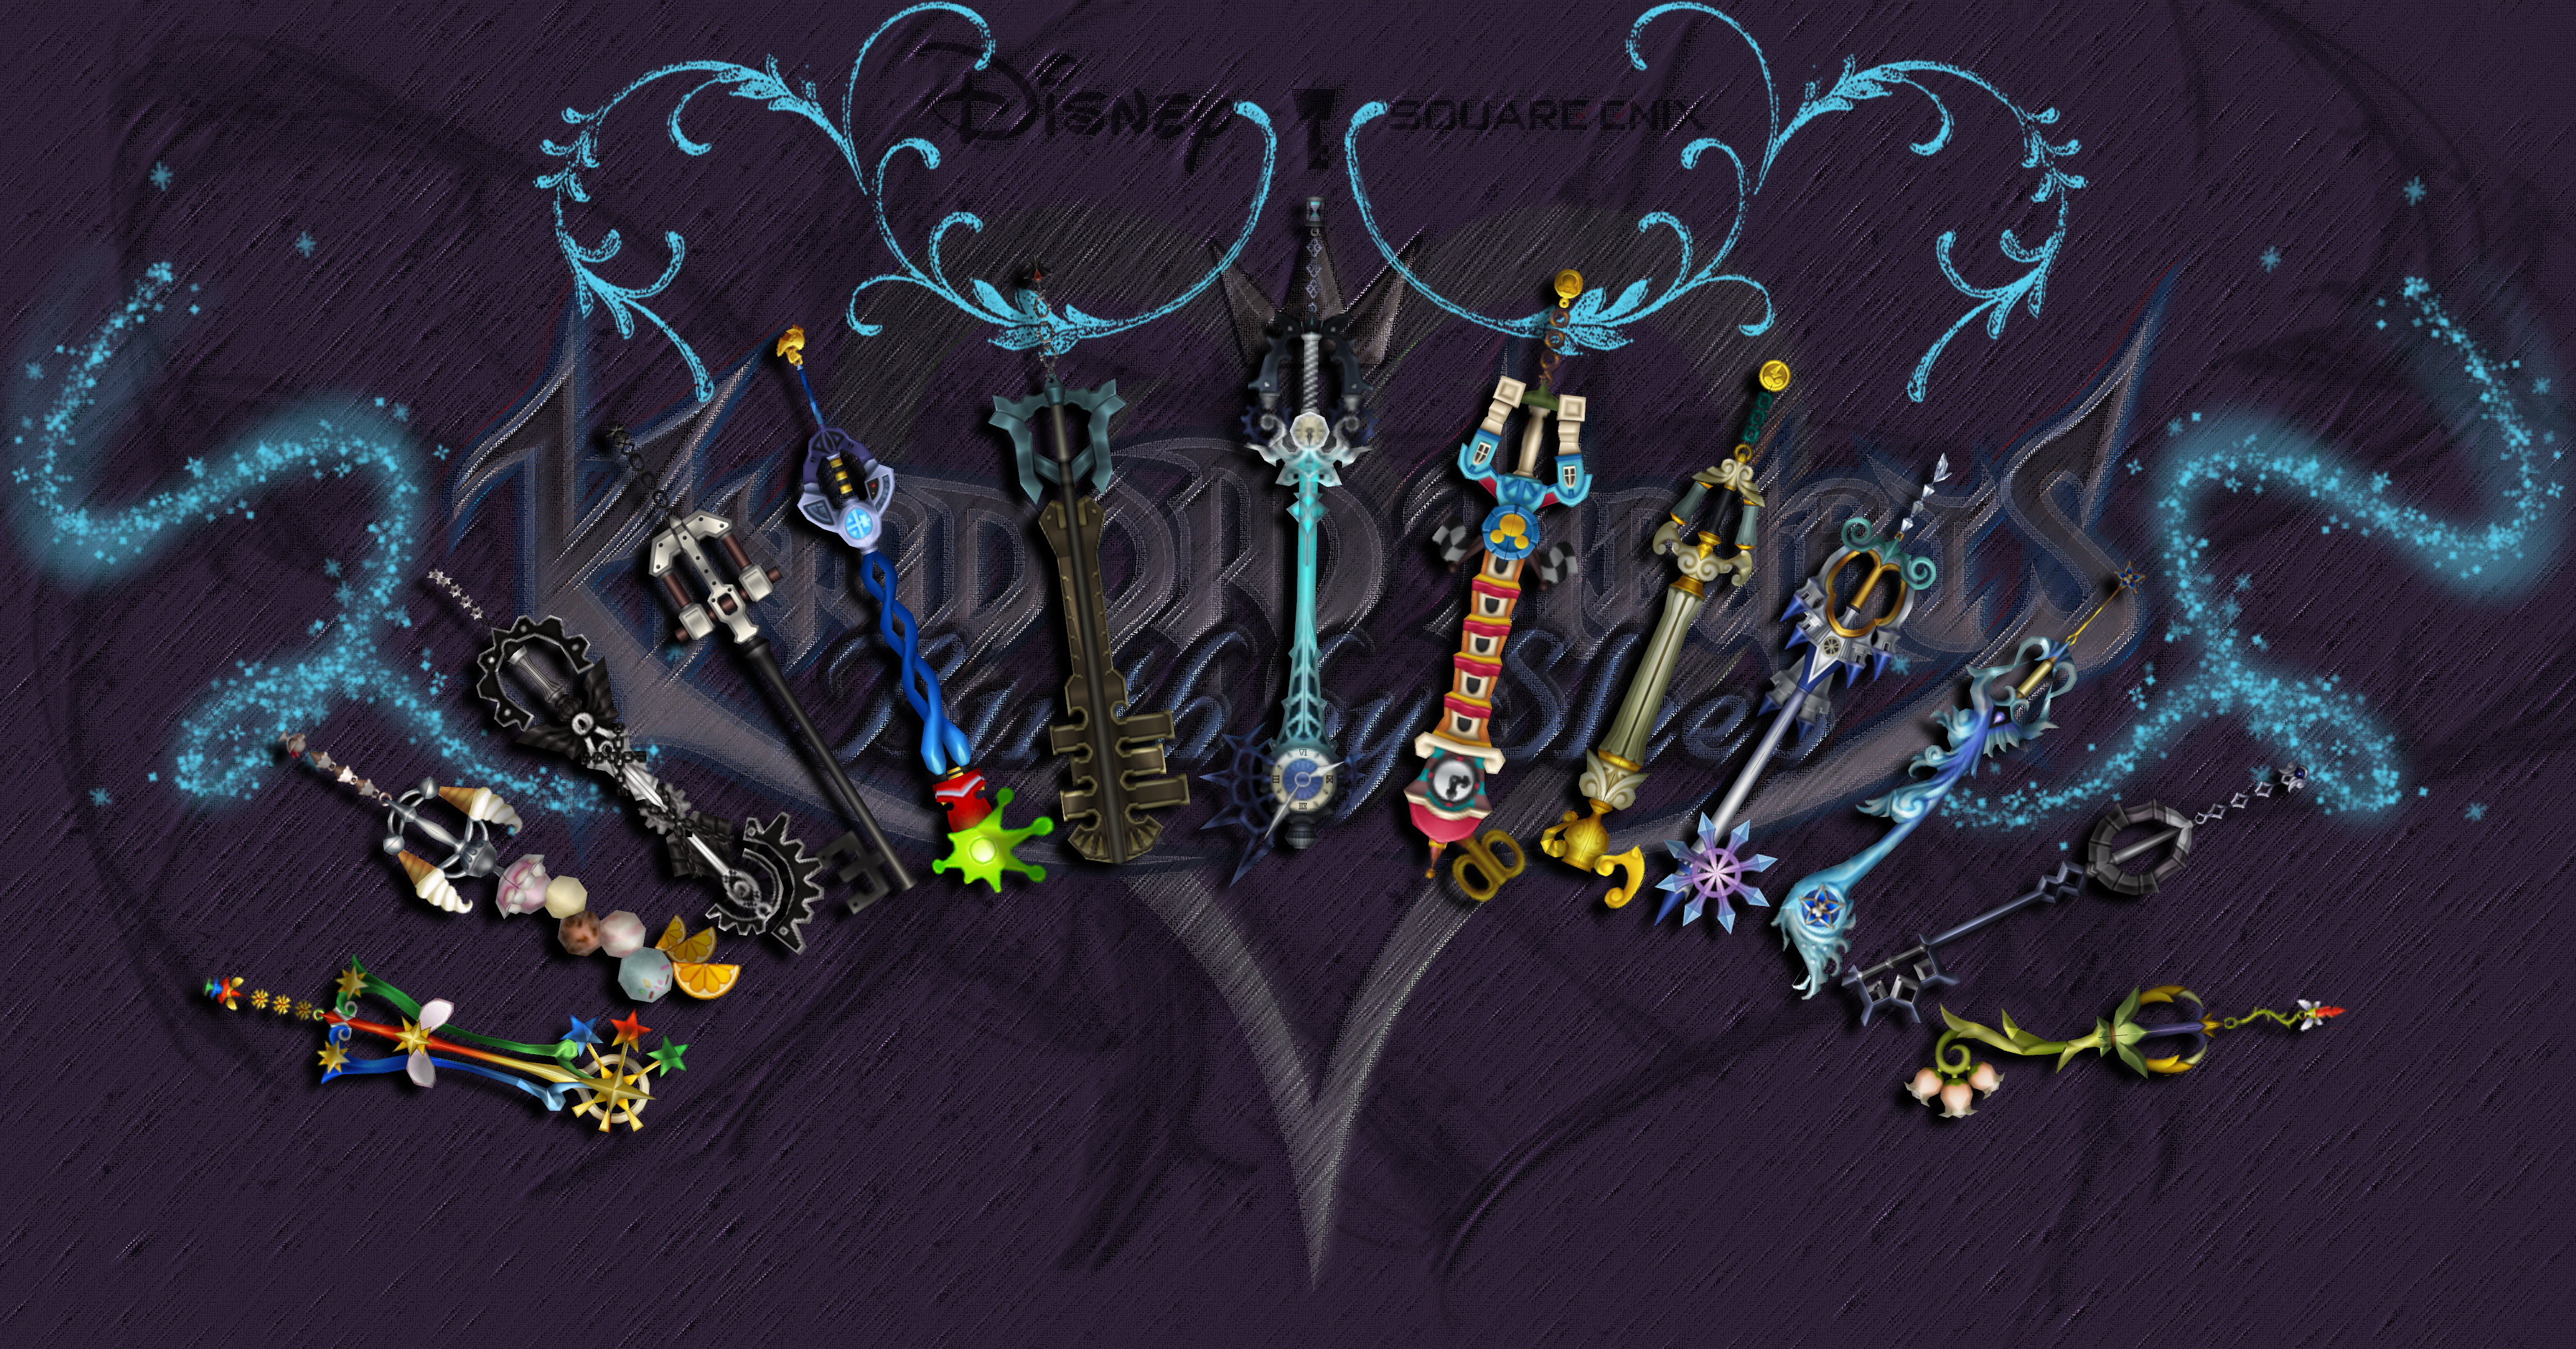 Kingdom Hearts Keyblade Graveyard Wallpaper Bbs Pack Xps By